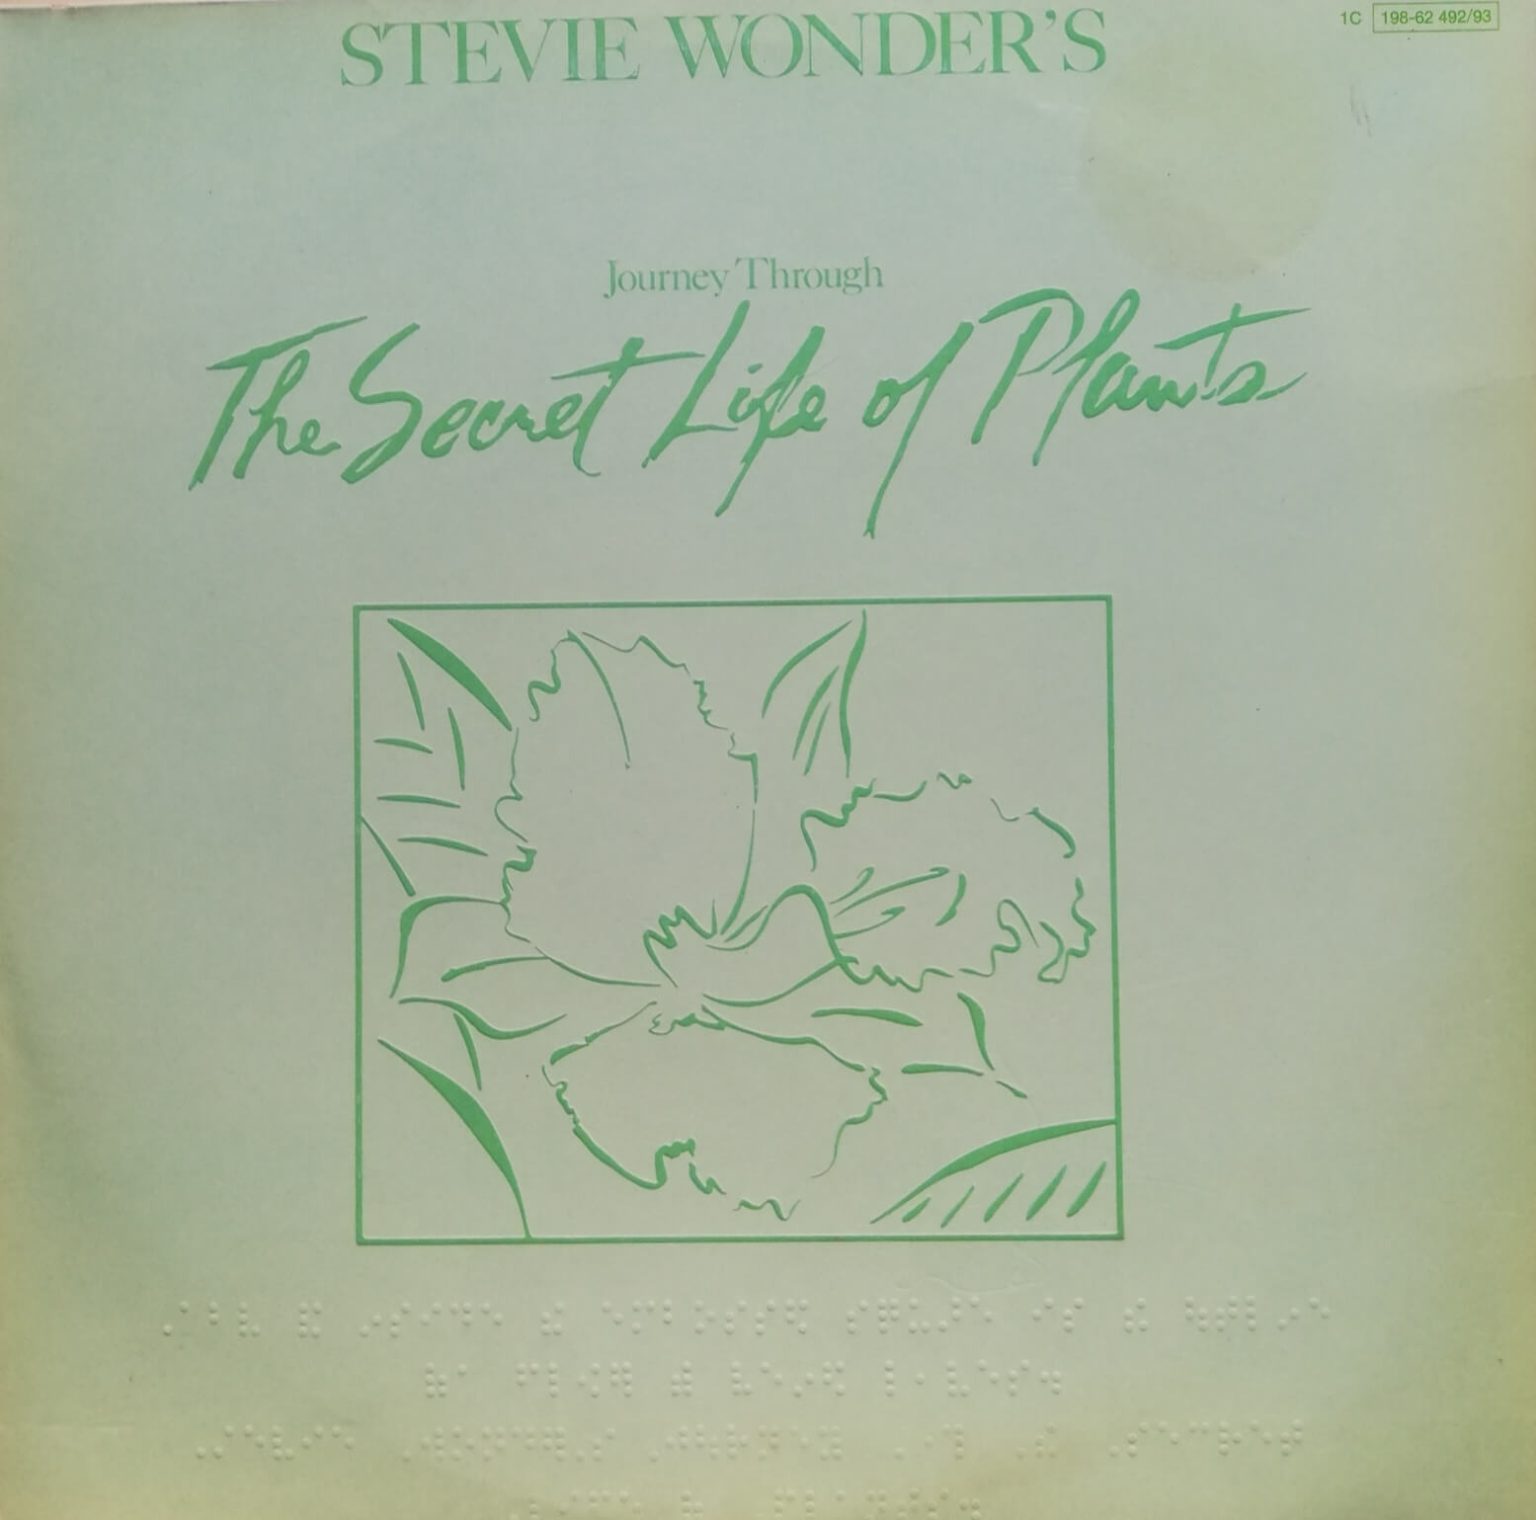 Okładka płyty winylowej artysty Stevie Wonder o tytule Stevie Wonder’s Journey Through The Secret Life Of Plants